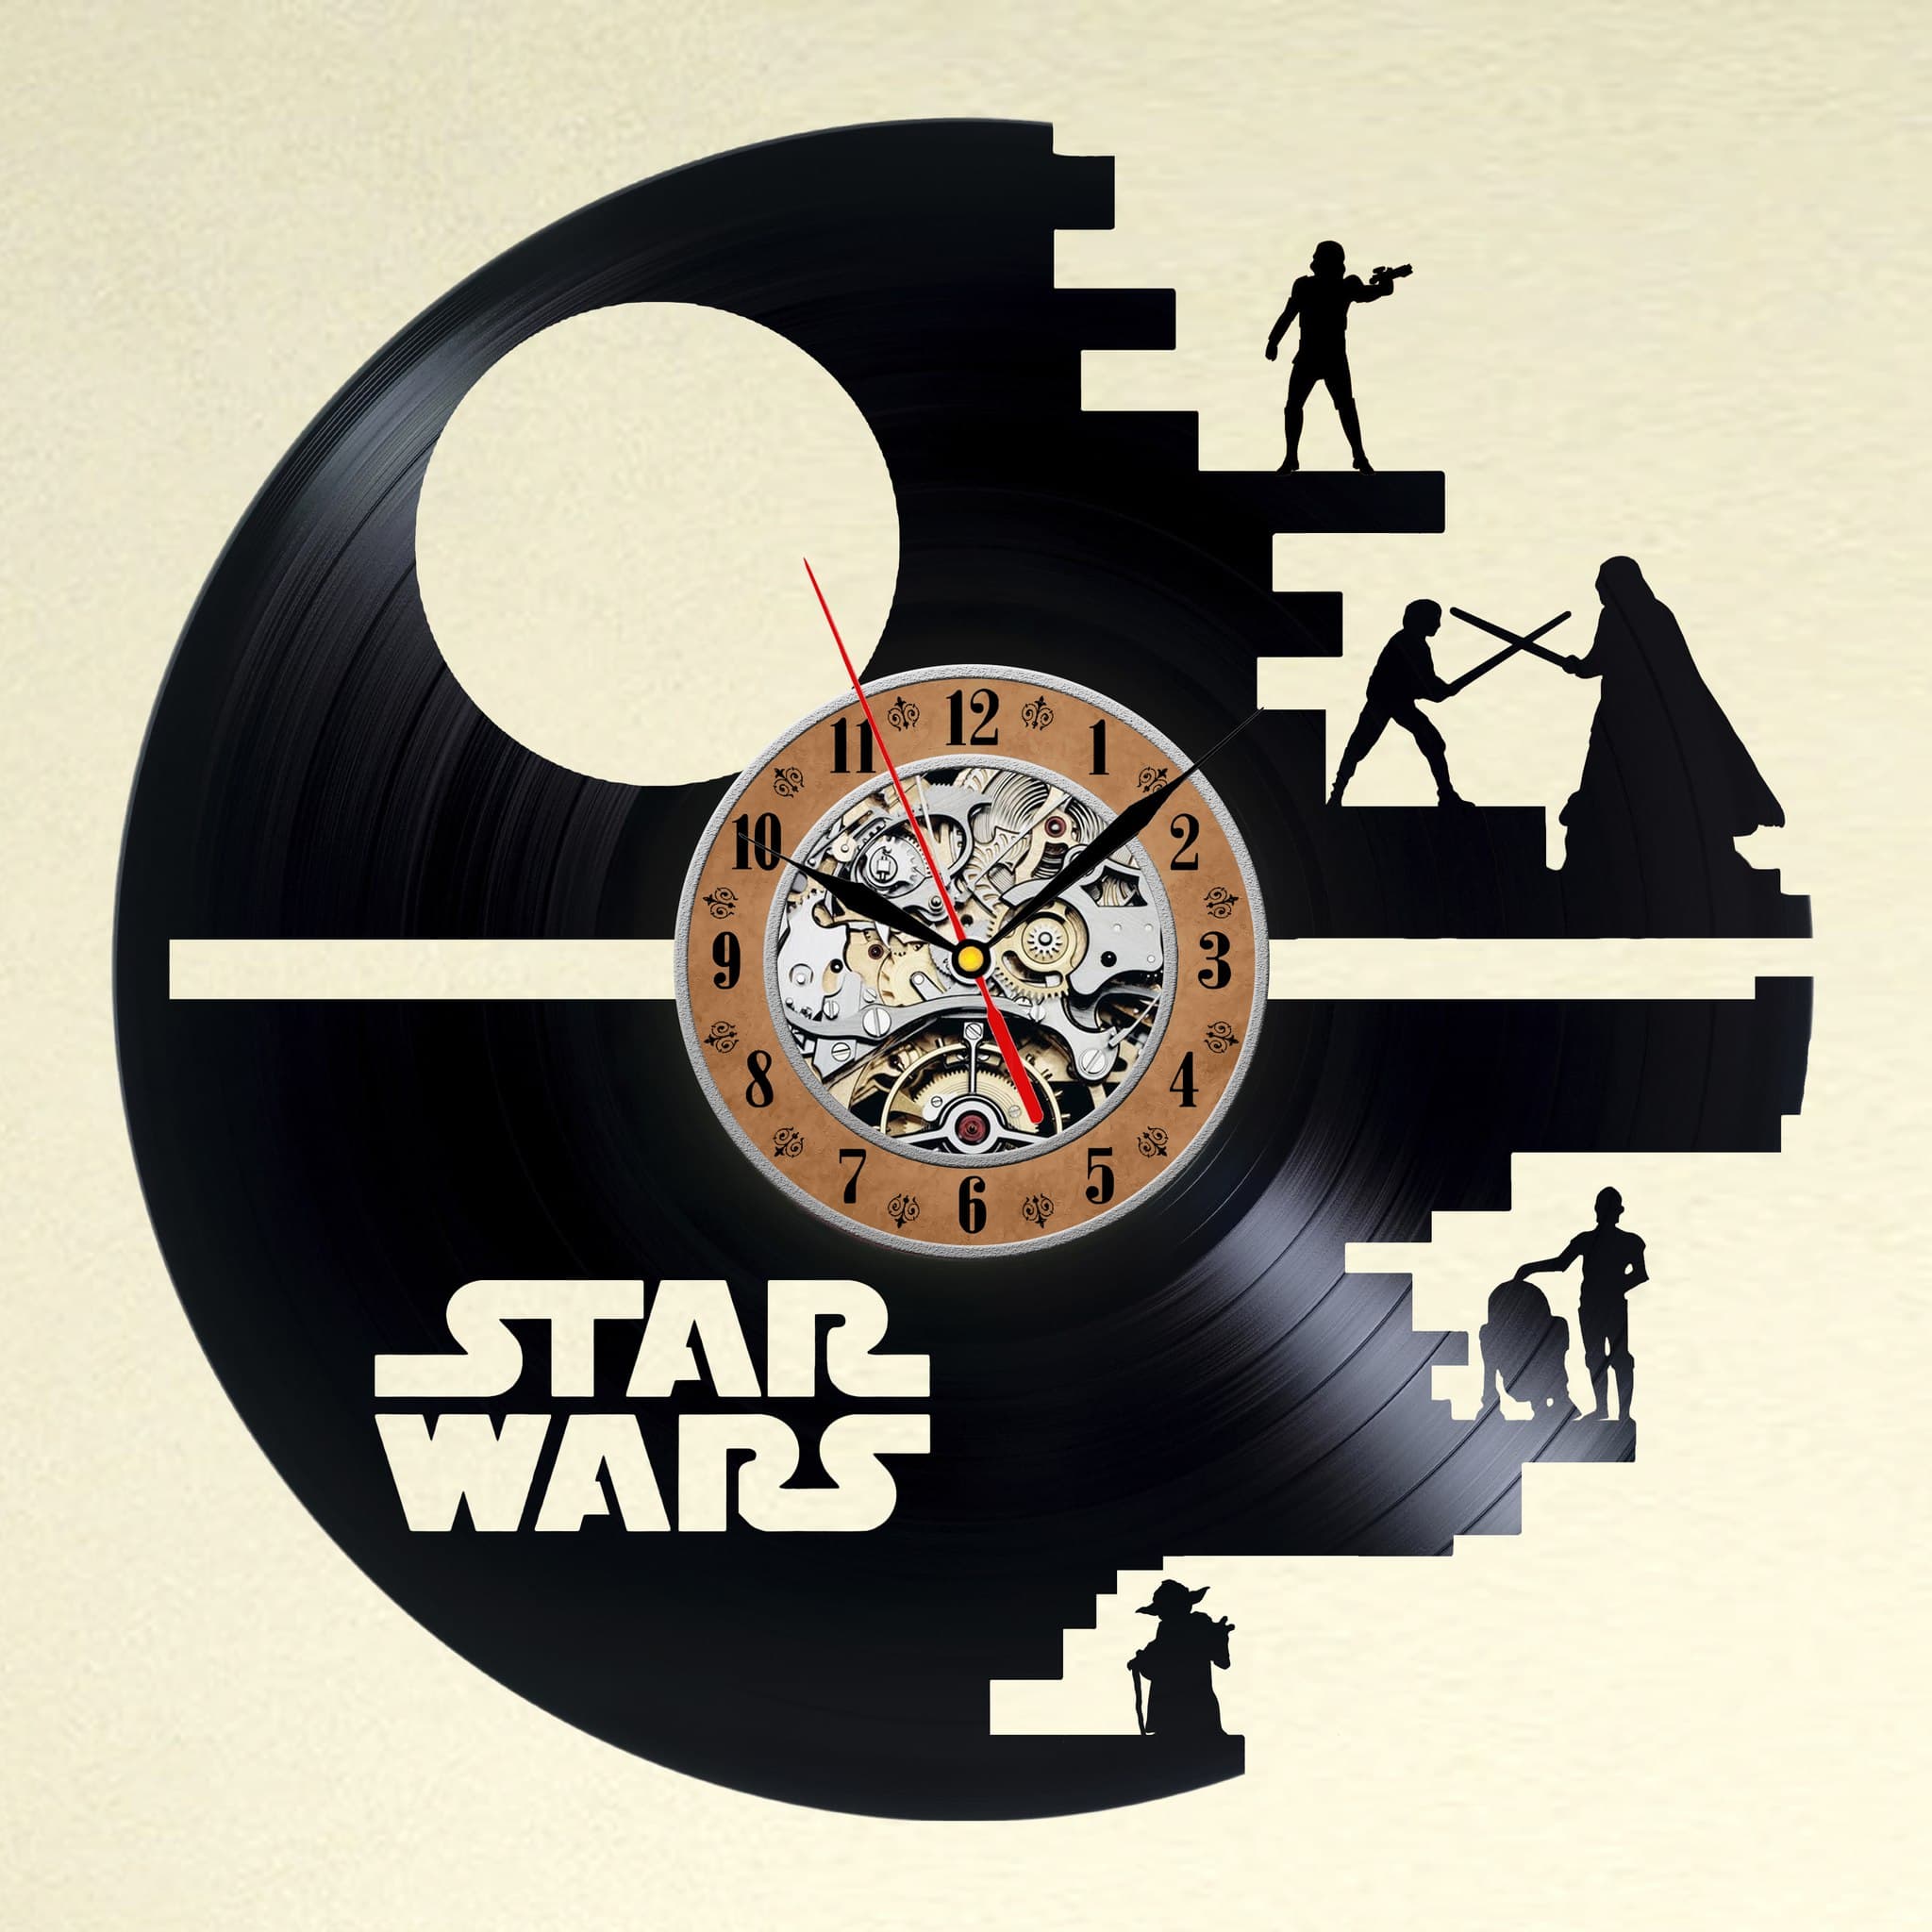 Star Wars vinyl record clock wall decor birthday gift new